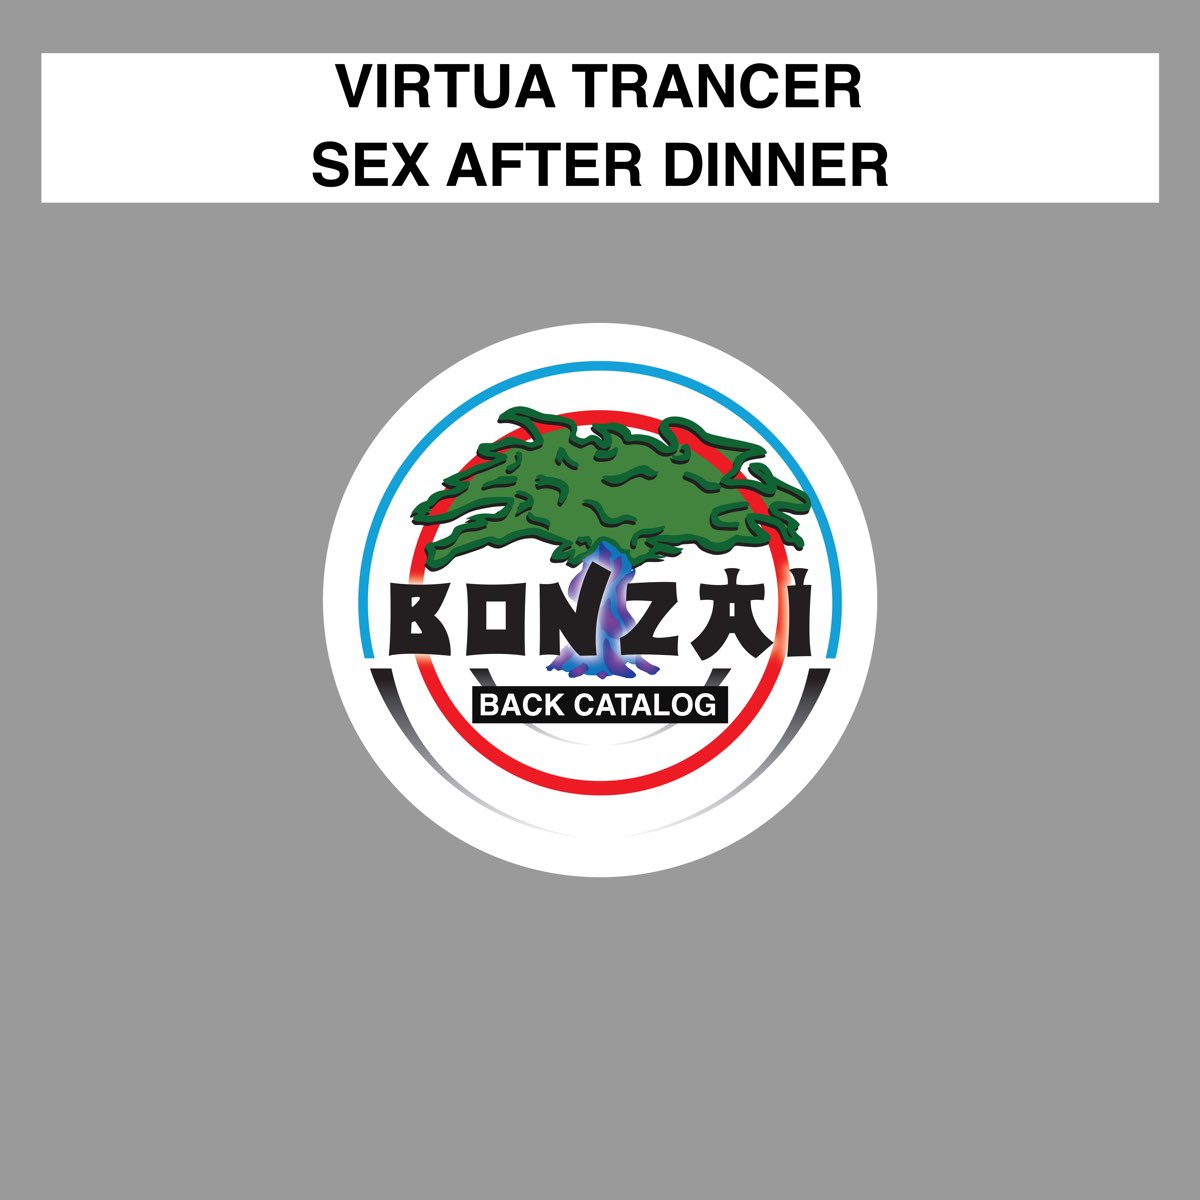 After Dinner Sex